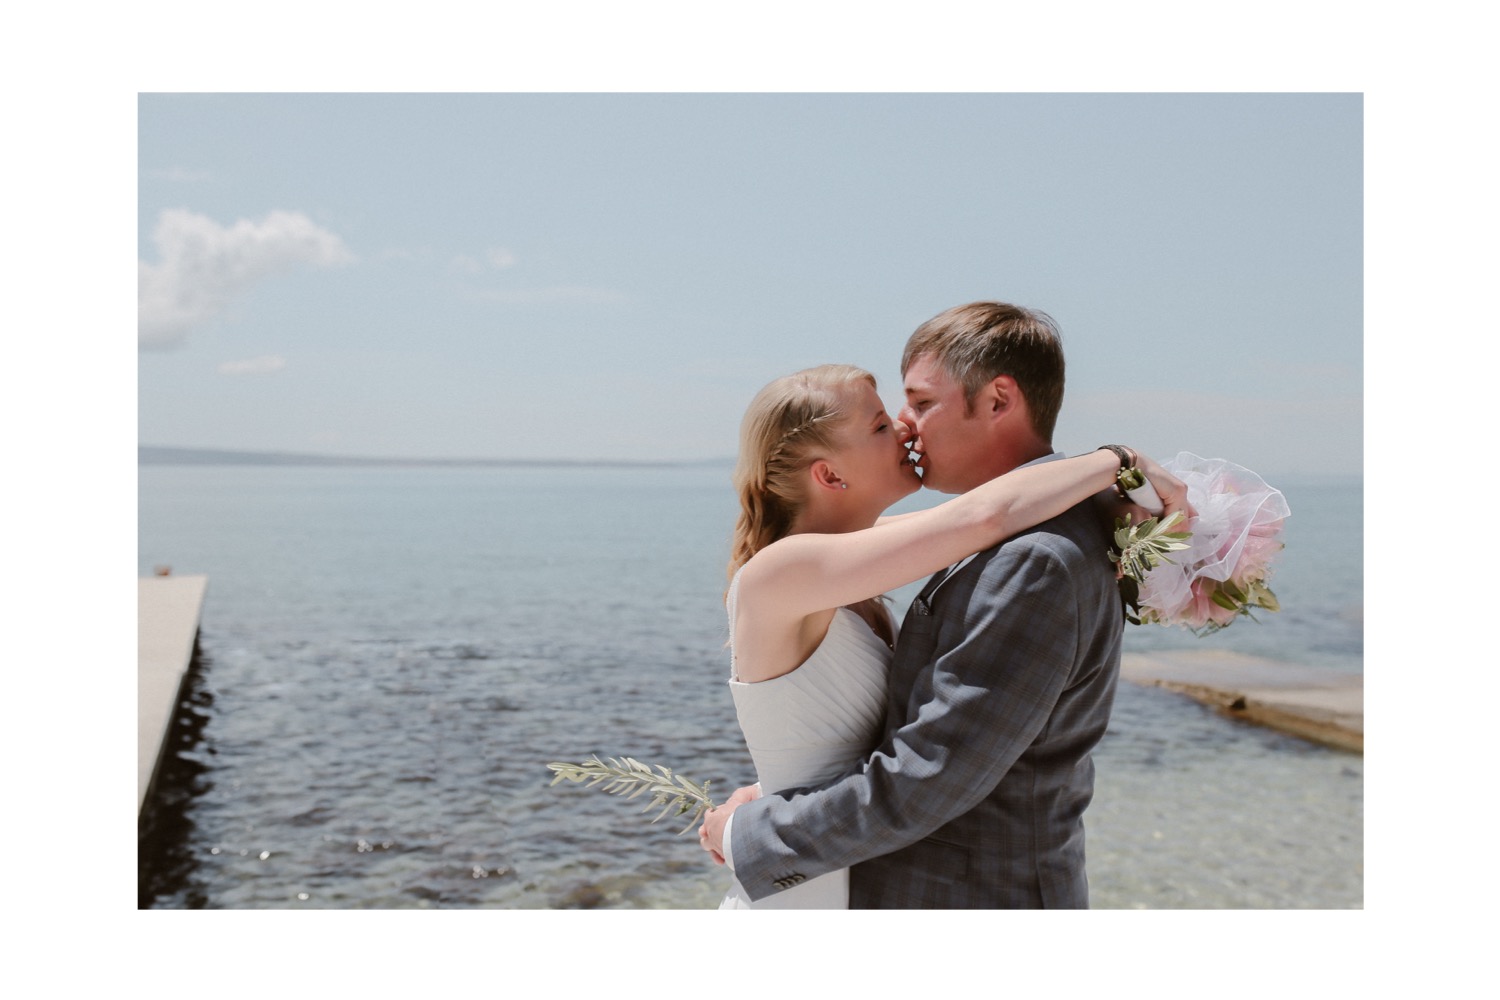 Croatia beach elopement hilke thomas love and ventures photography 43 | Croatia Elopement Photographer and Videographer